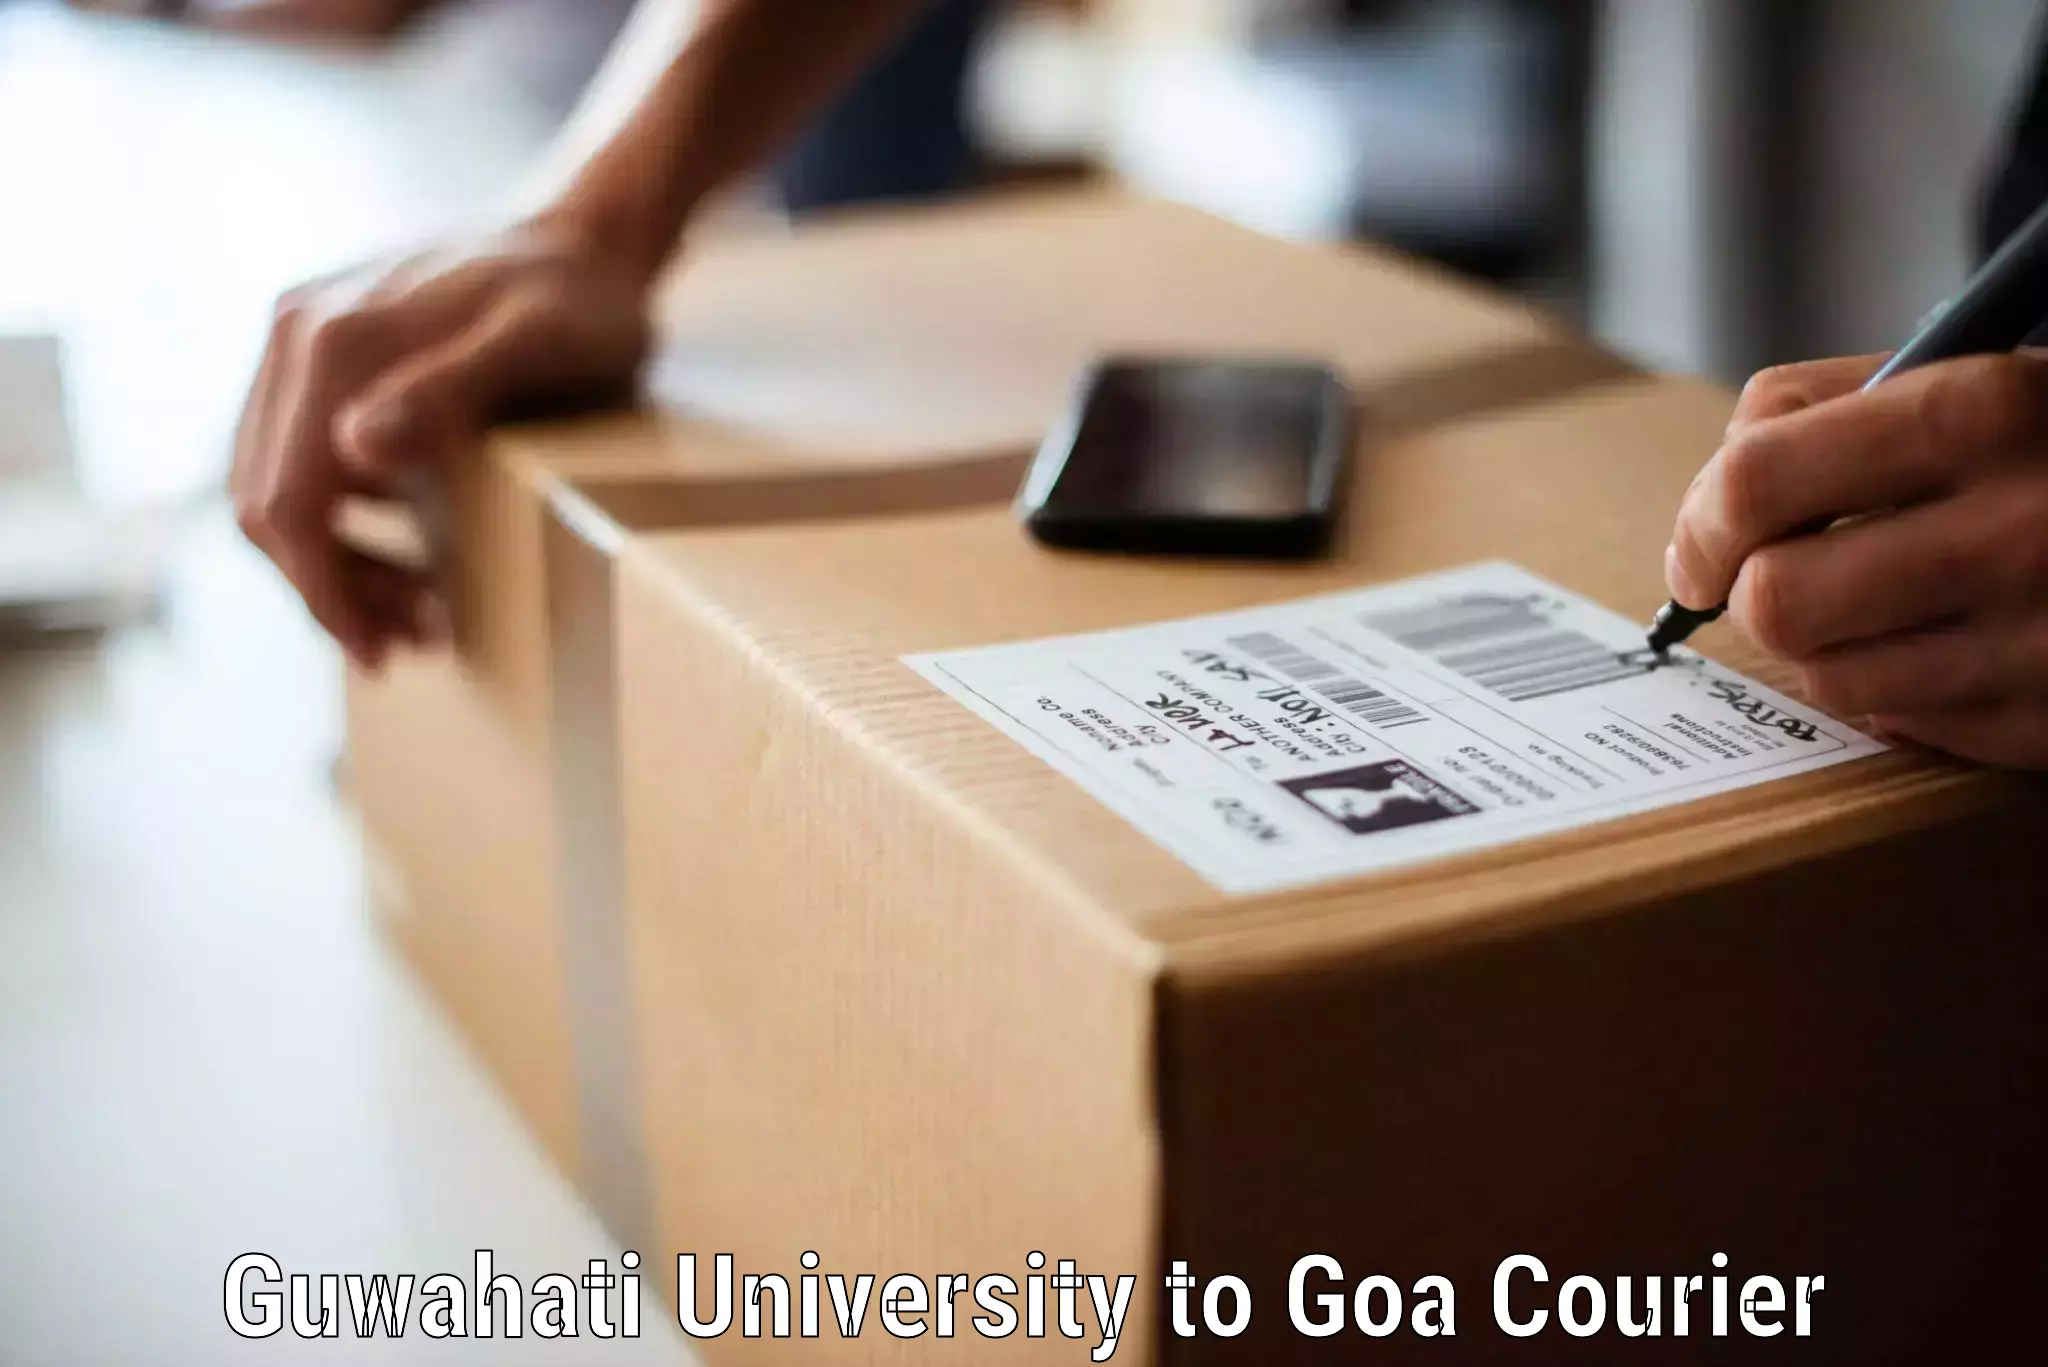 Residential moving experts Guwahati University to Goa University